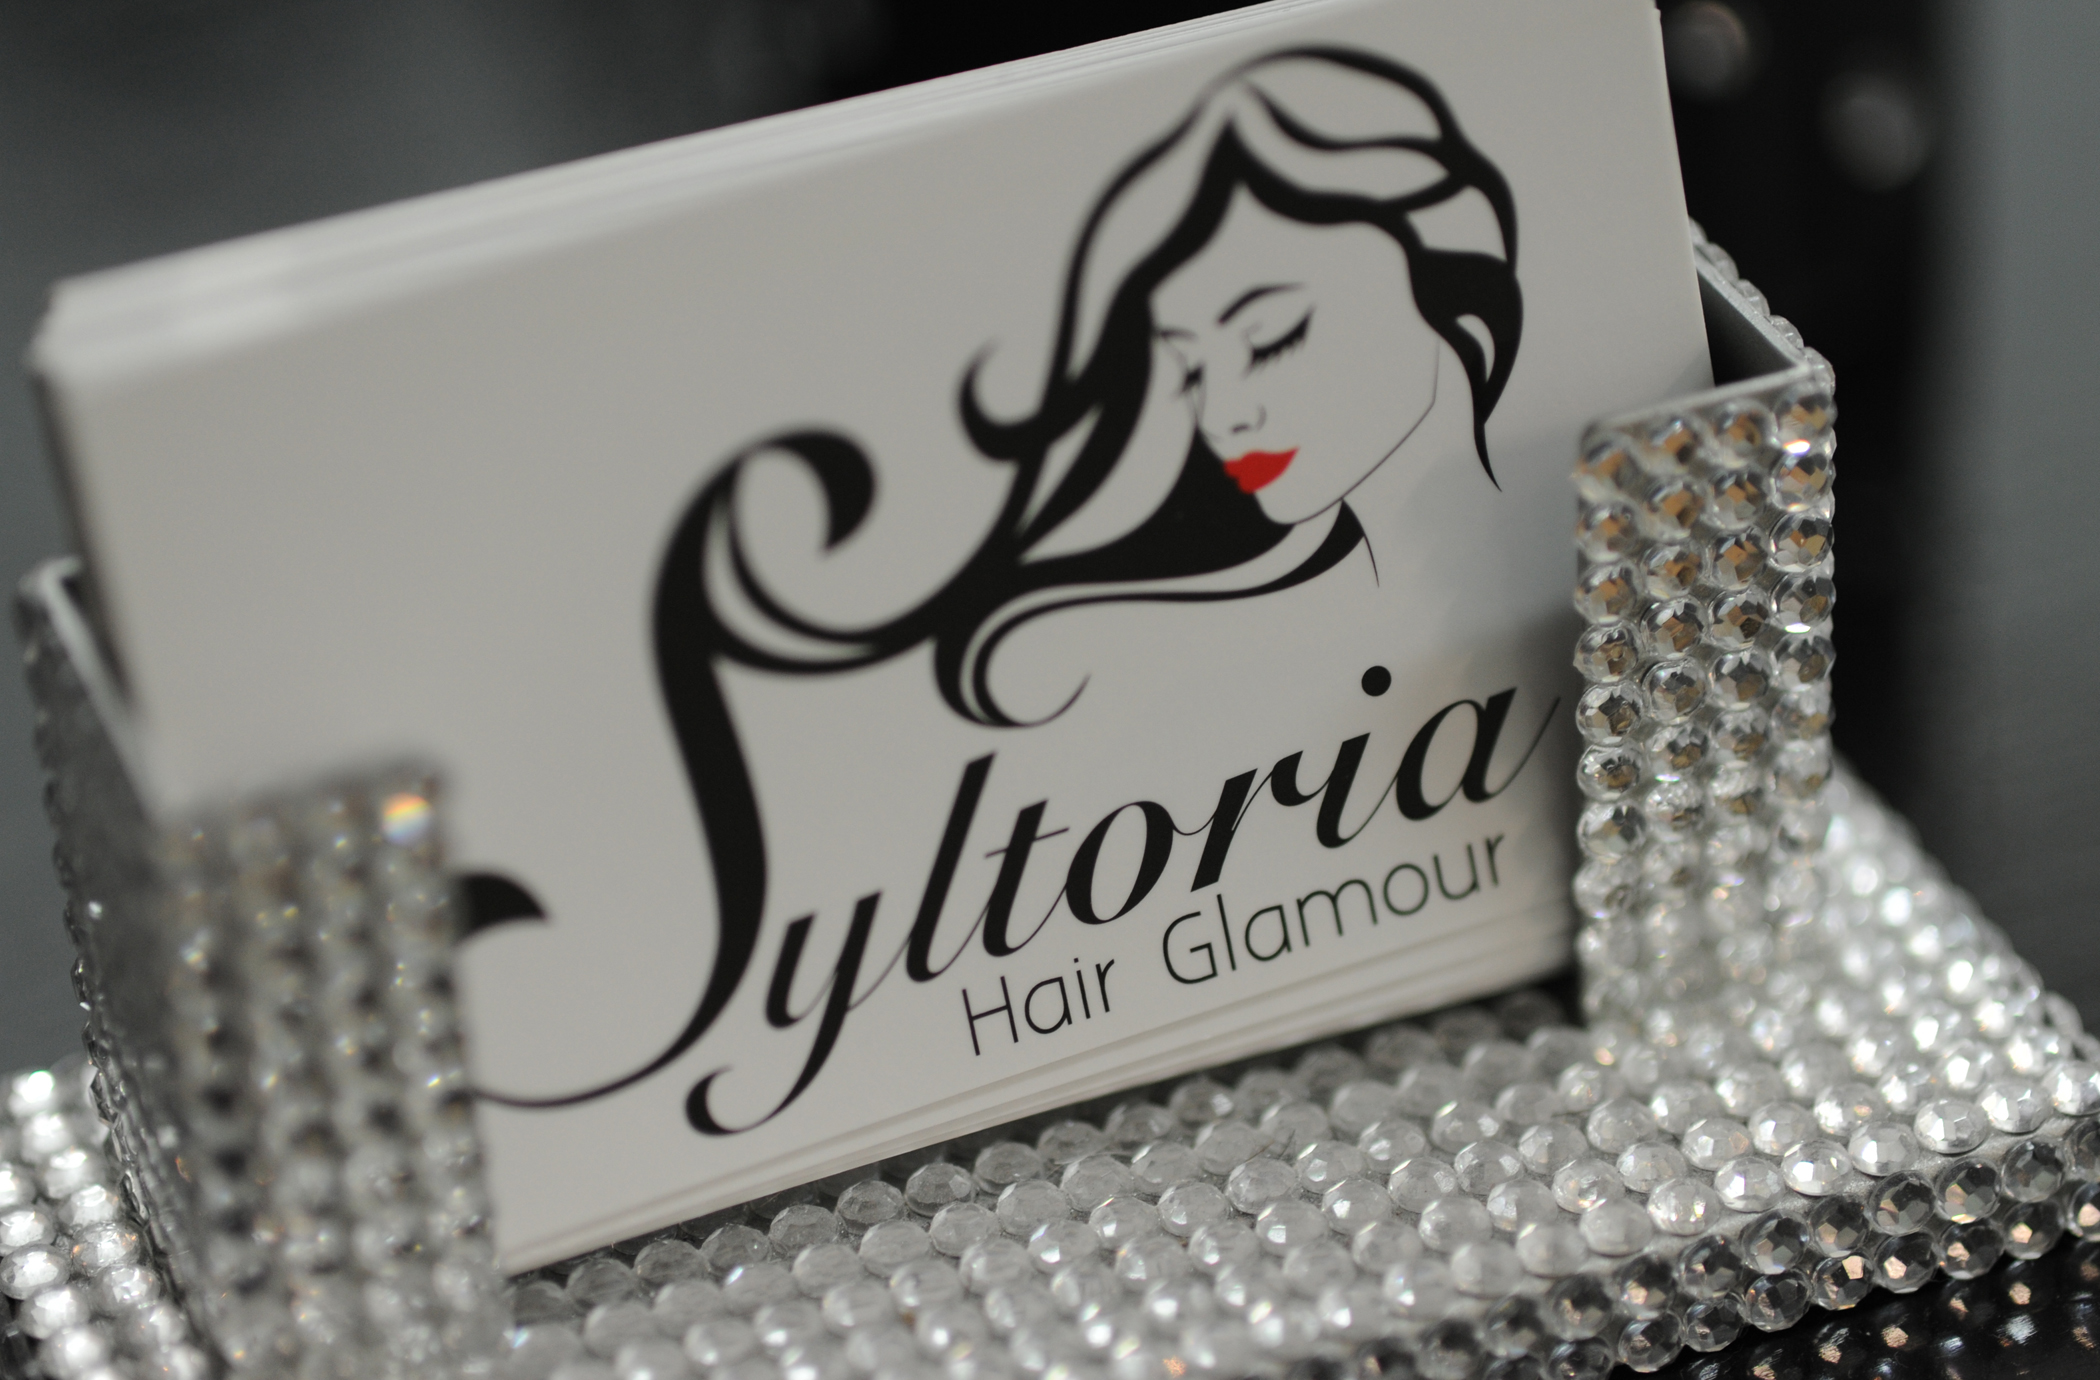 Syltoria Hair Glamour